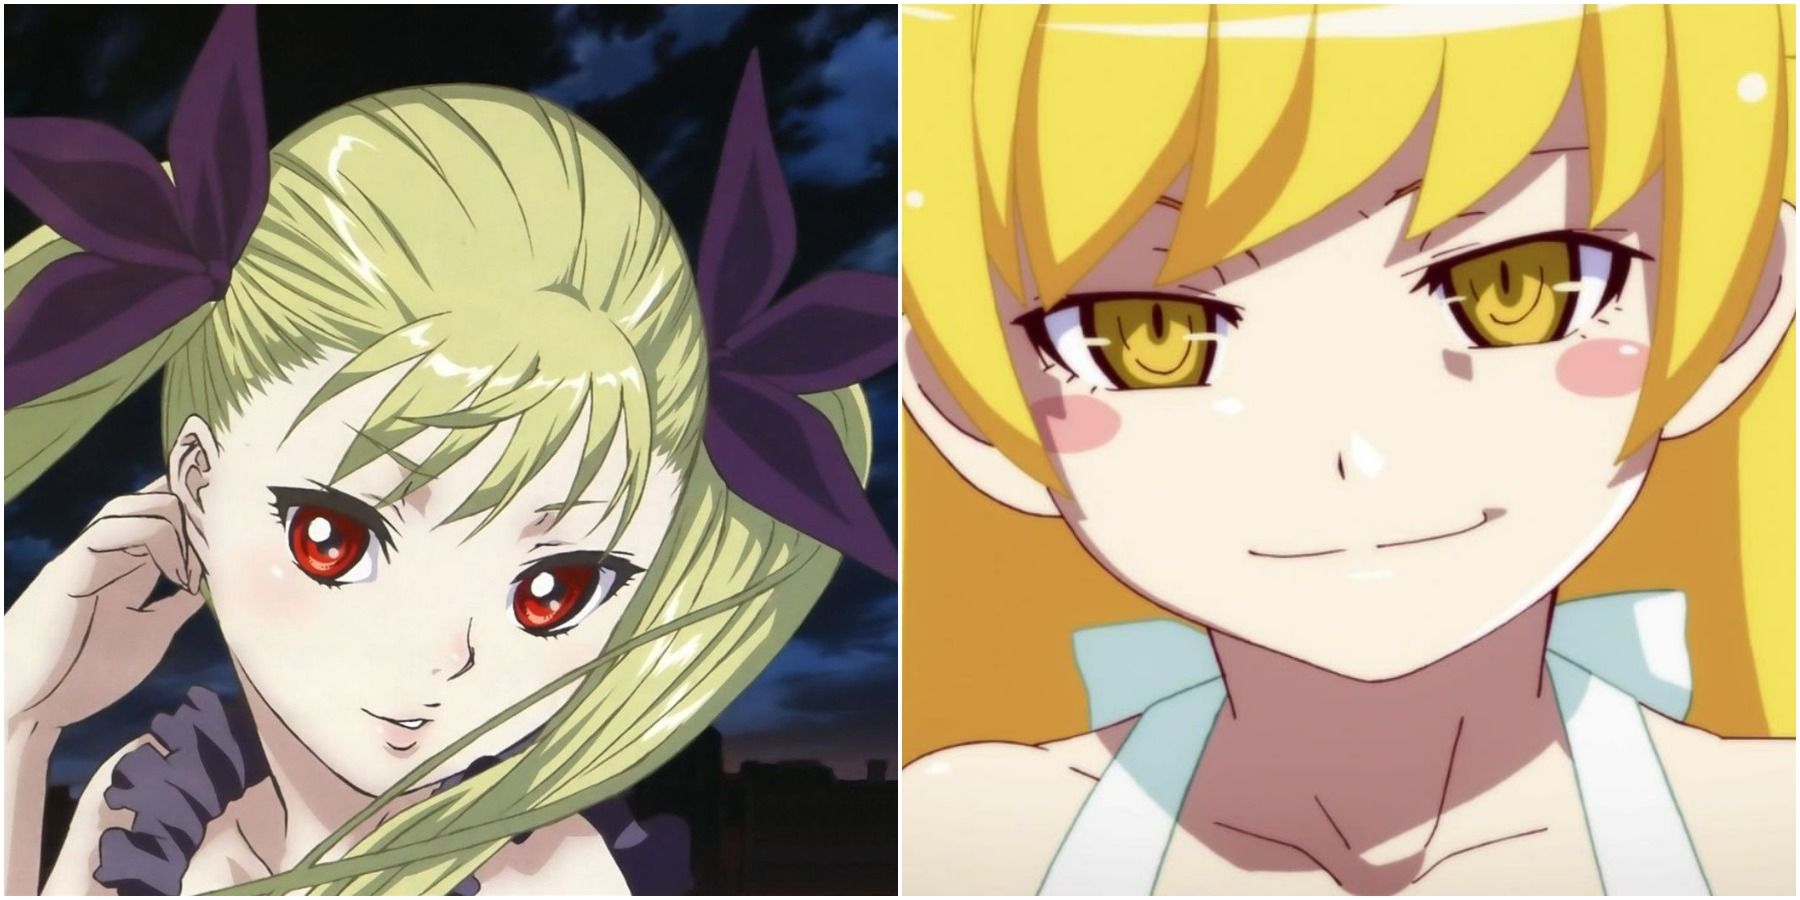 The Most Iconic Female Anime Vampires